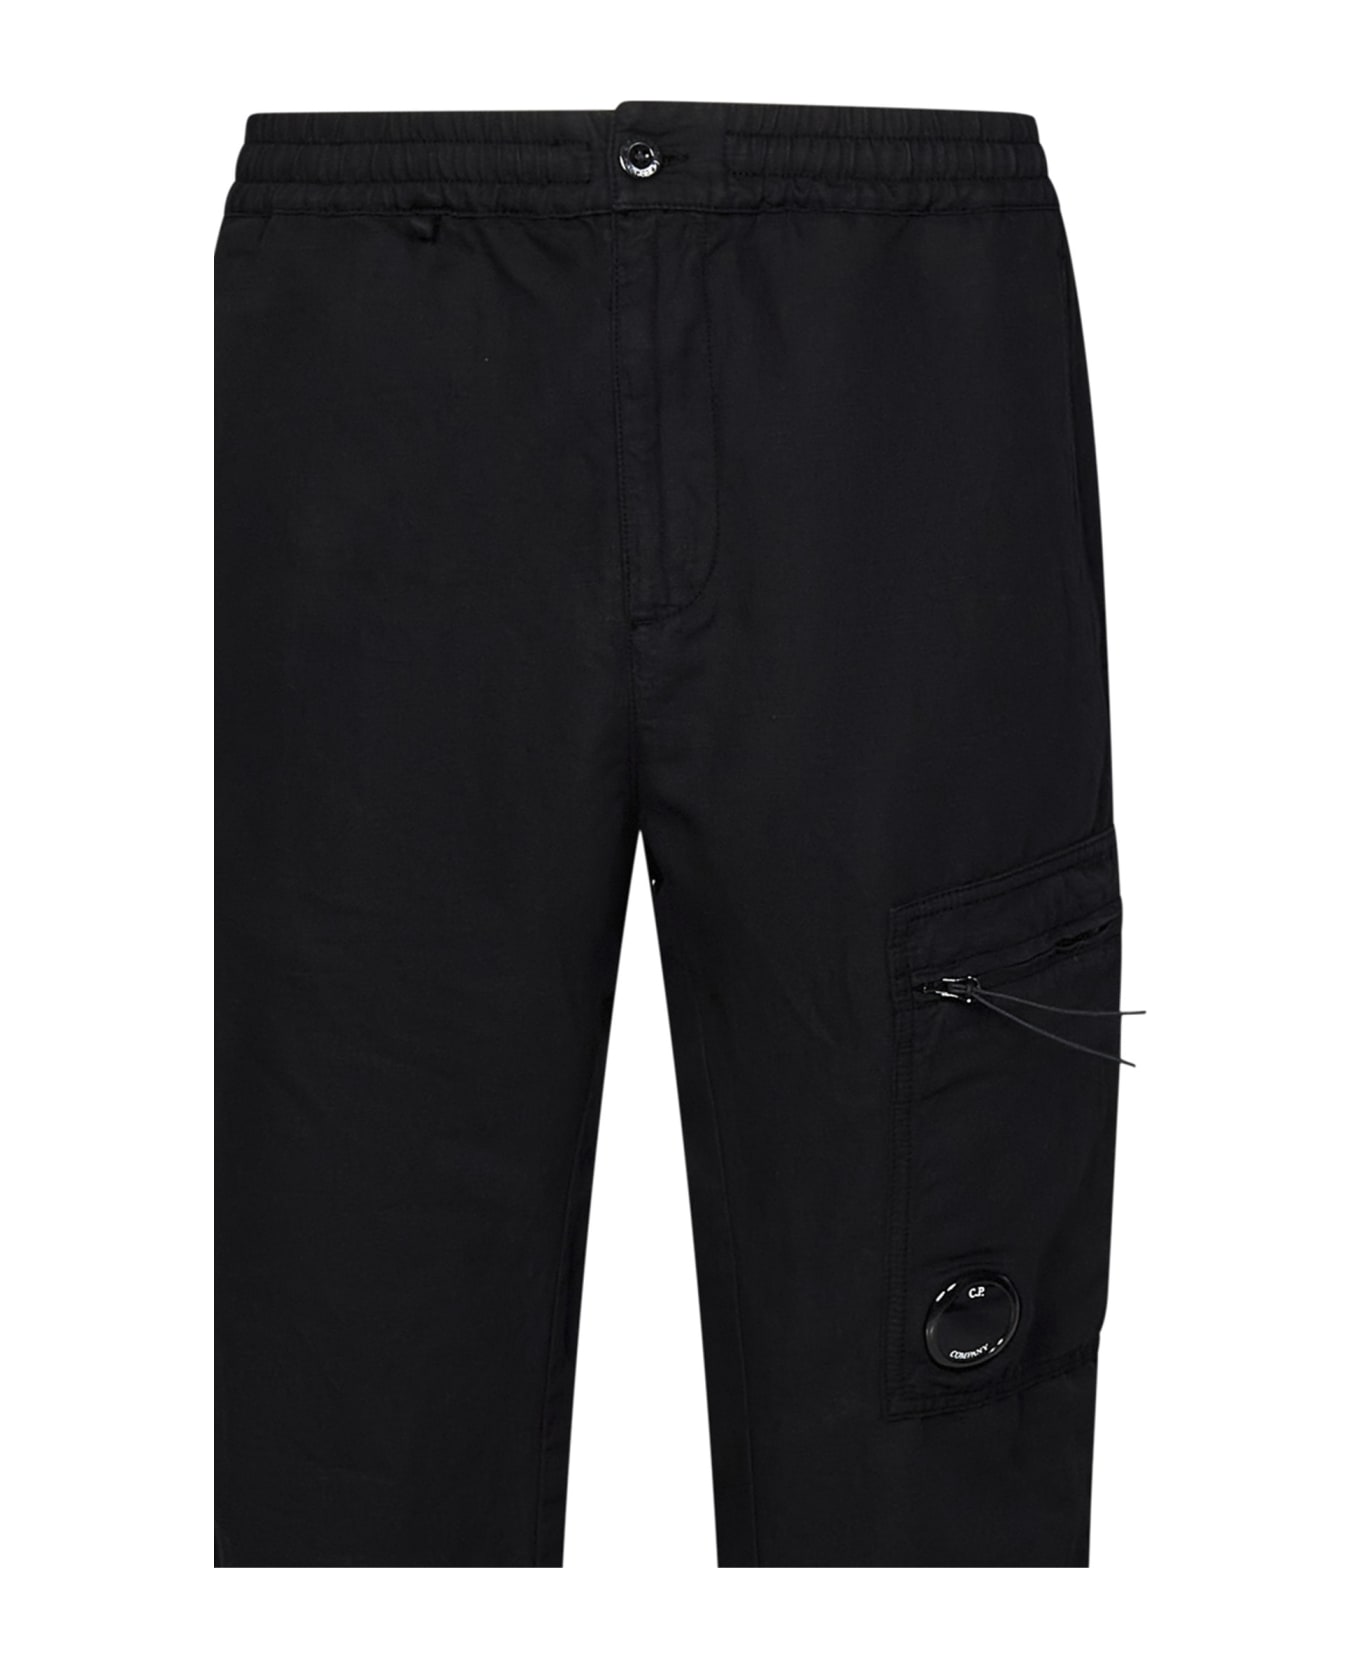 C.P. Company Trousers - Black